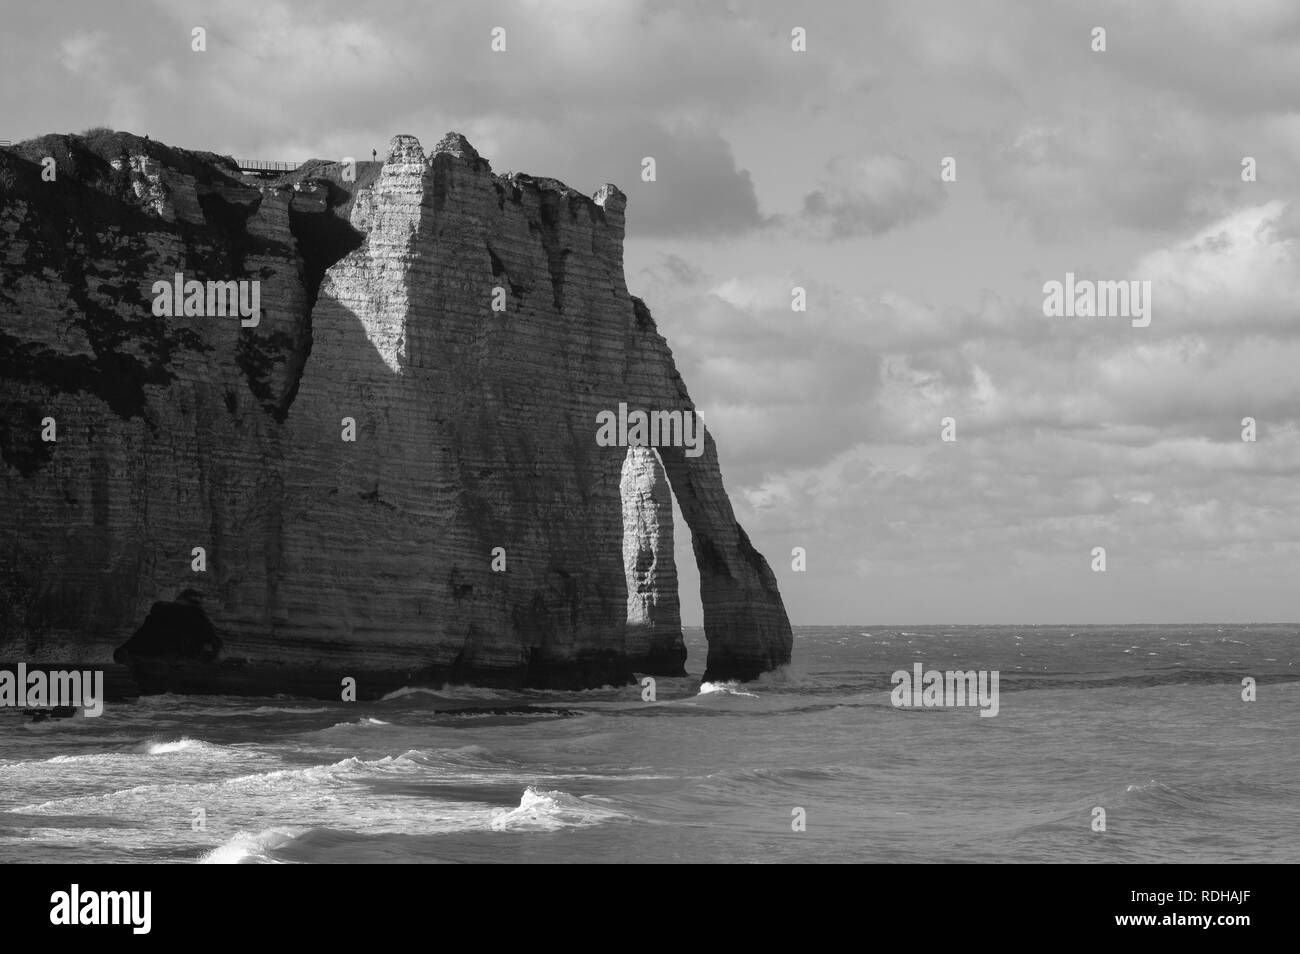 Famous natural cliffs in Etretat. Etretat is a commune in Seine-Maritime department in Haute-Normandie region in France. Stock Photo